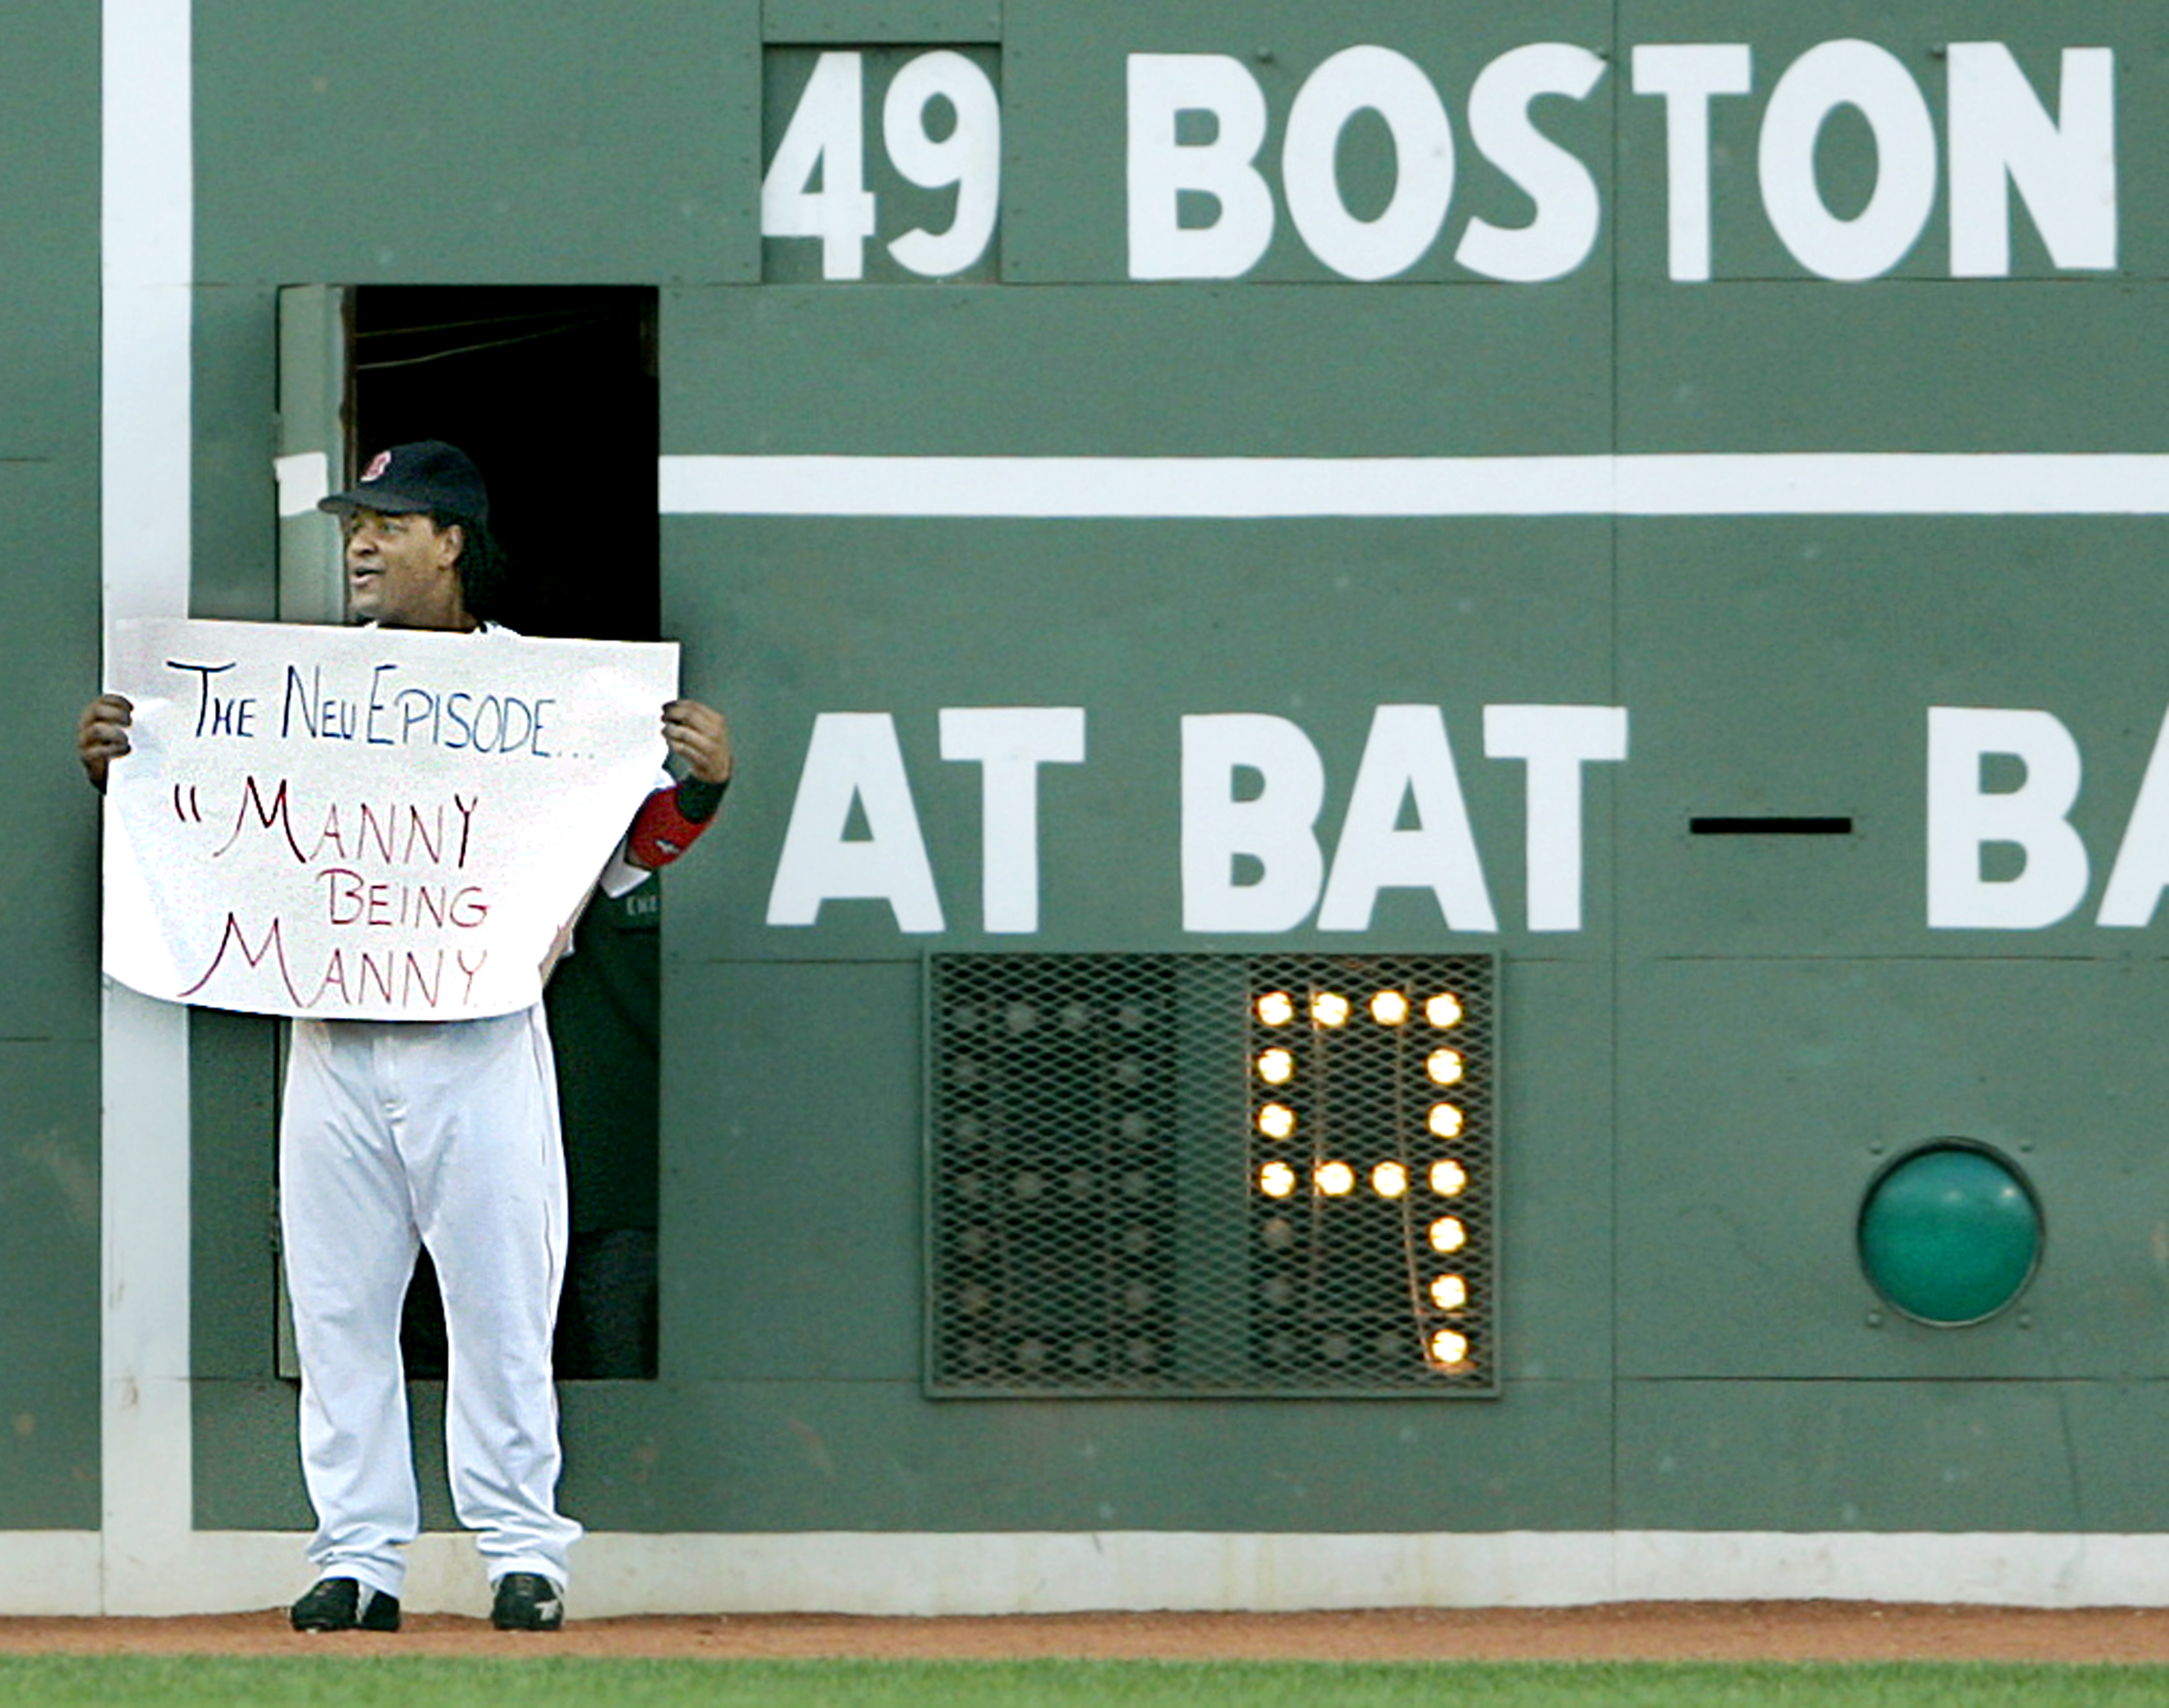 Watch: Red Sox fan fails to recognize Manny Ramirez - The Boston Globe